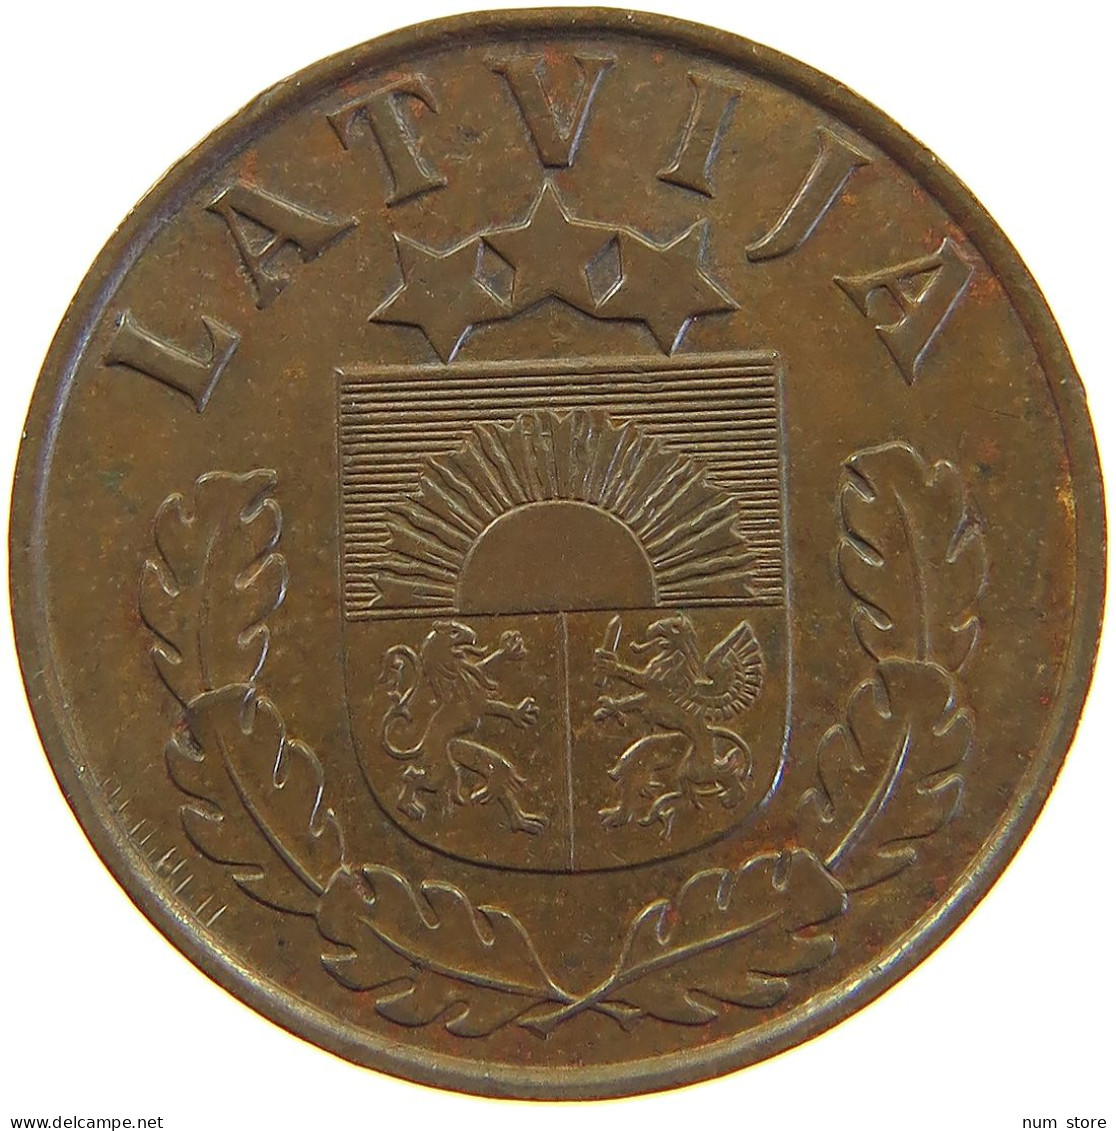 LATVIA 2 SANTIMI 1939  #c050 0259 - Letonia